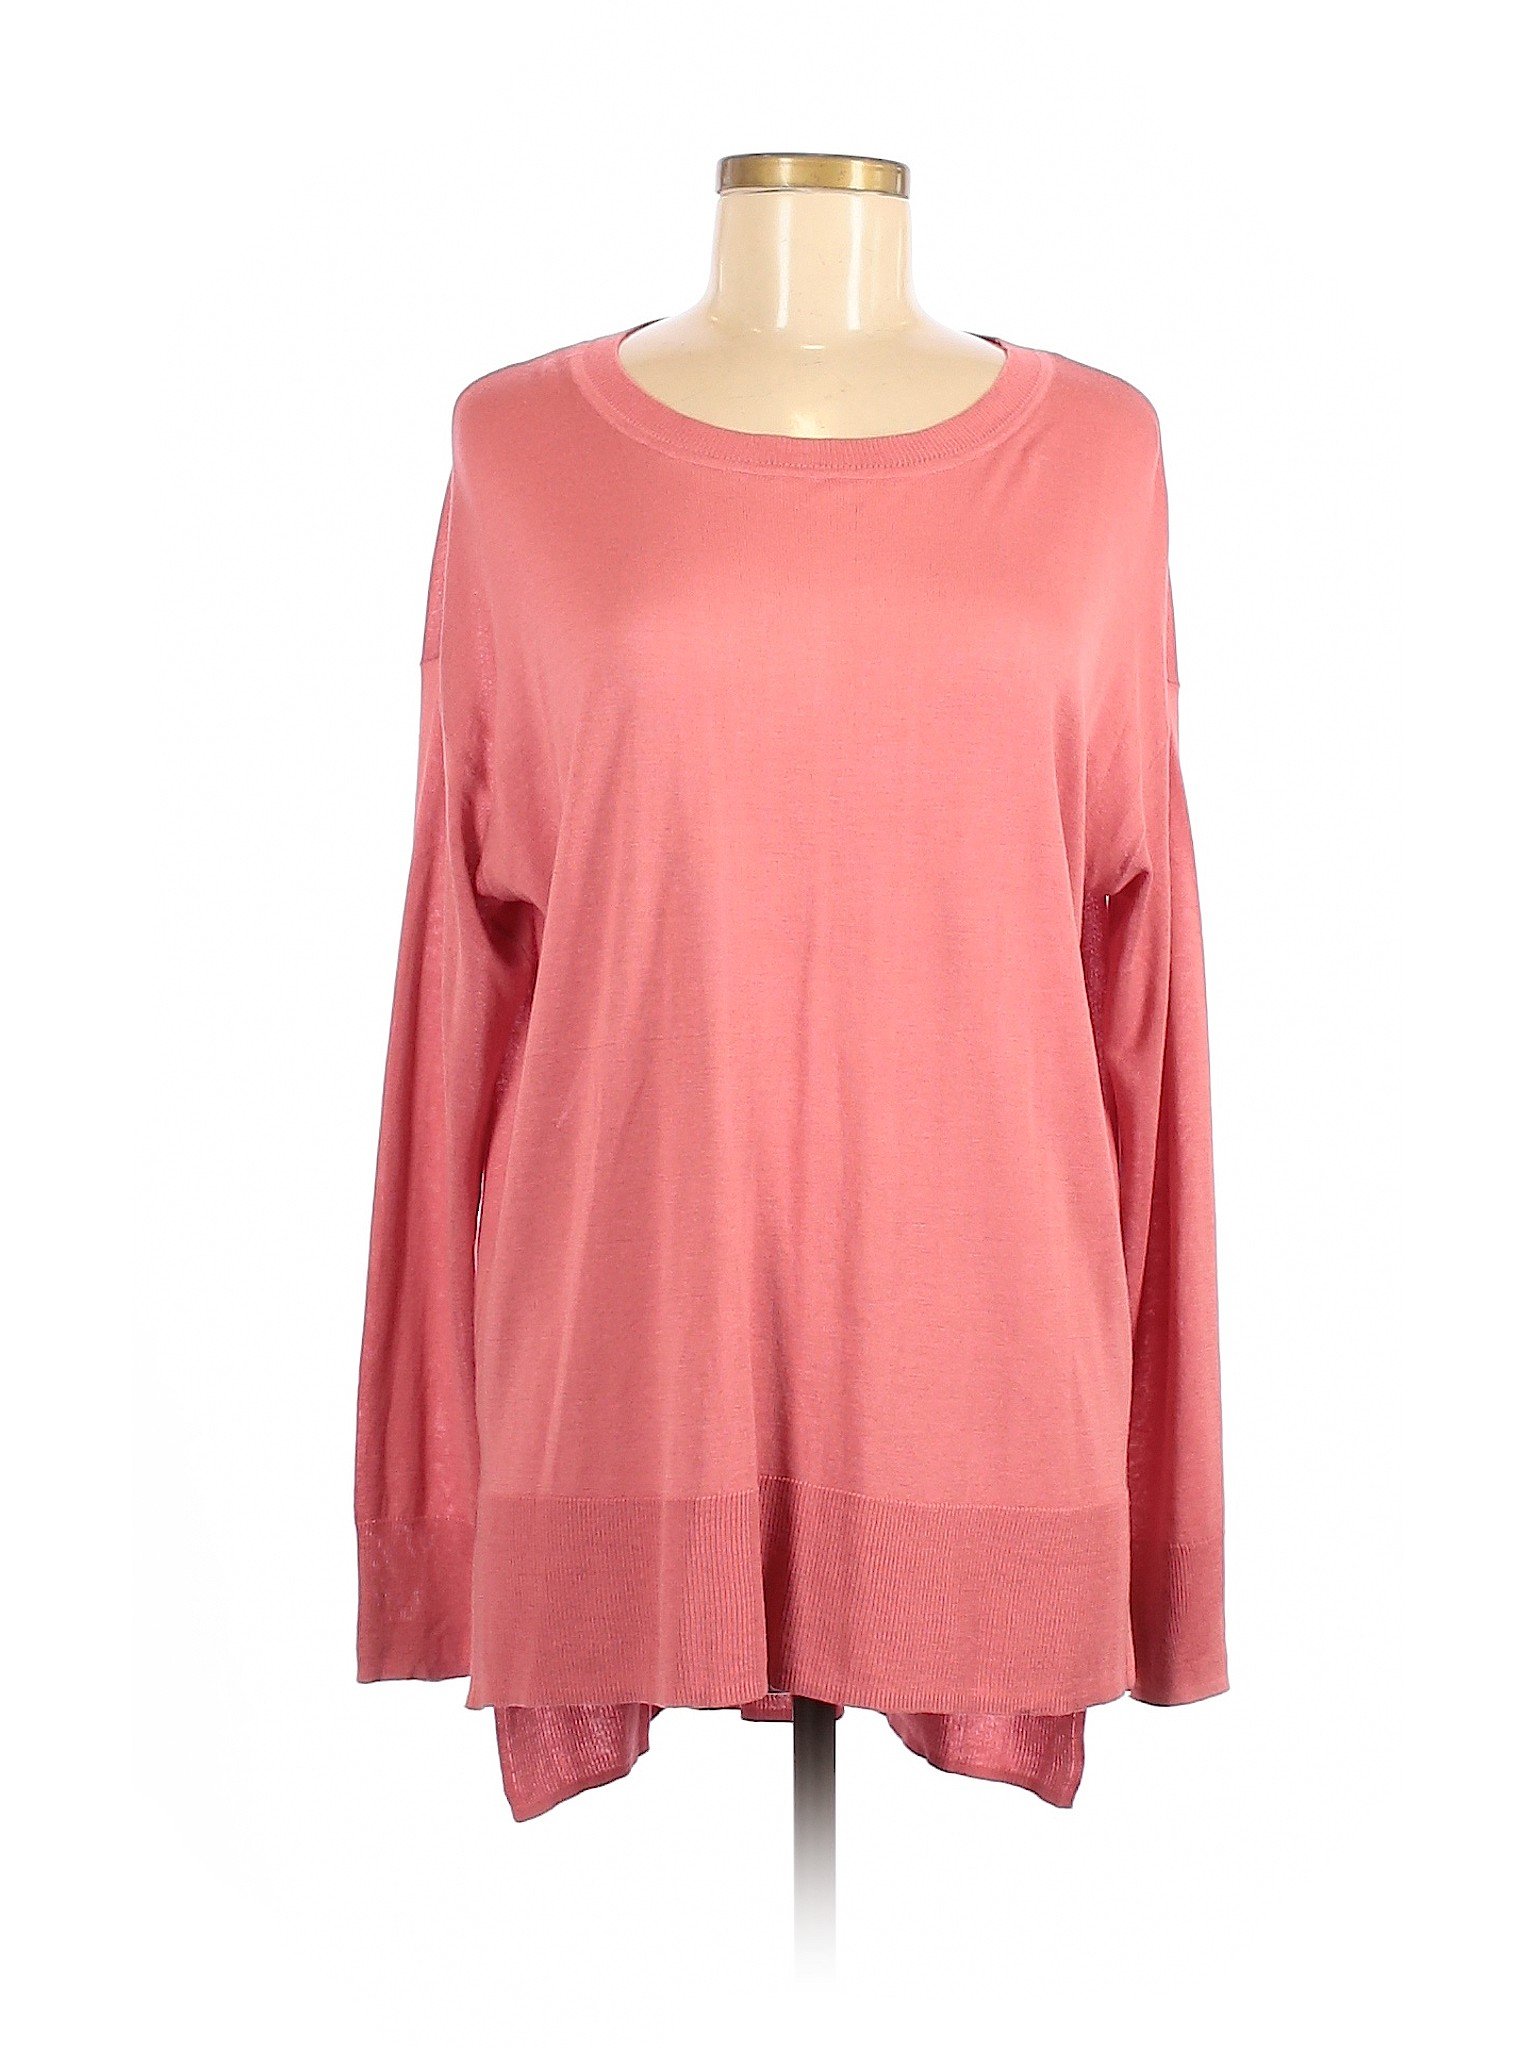 H&M Women Pink Long Sleeve Top M | eBay